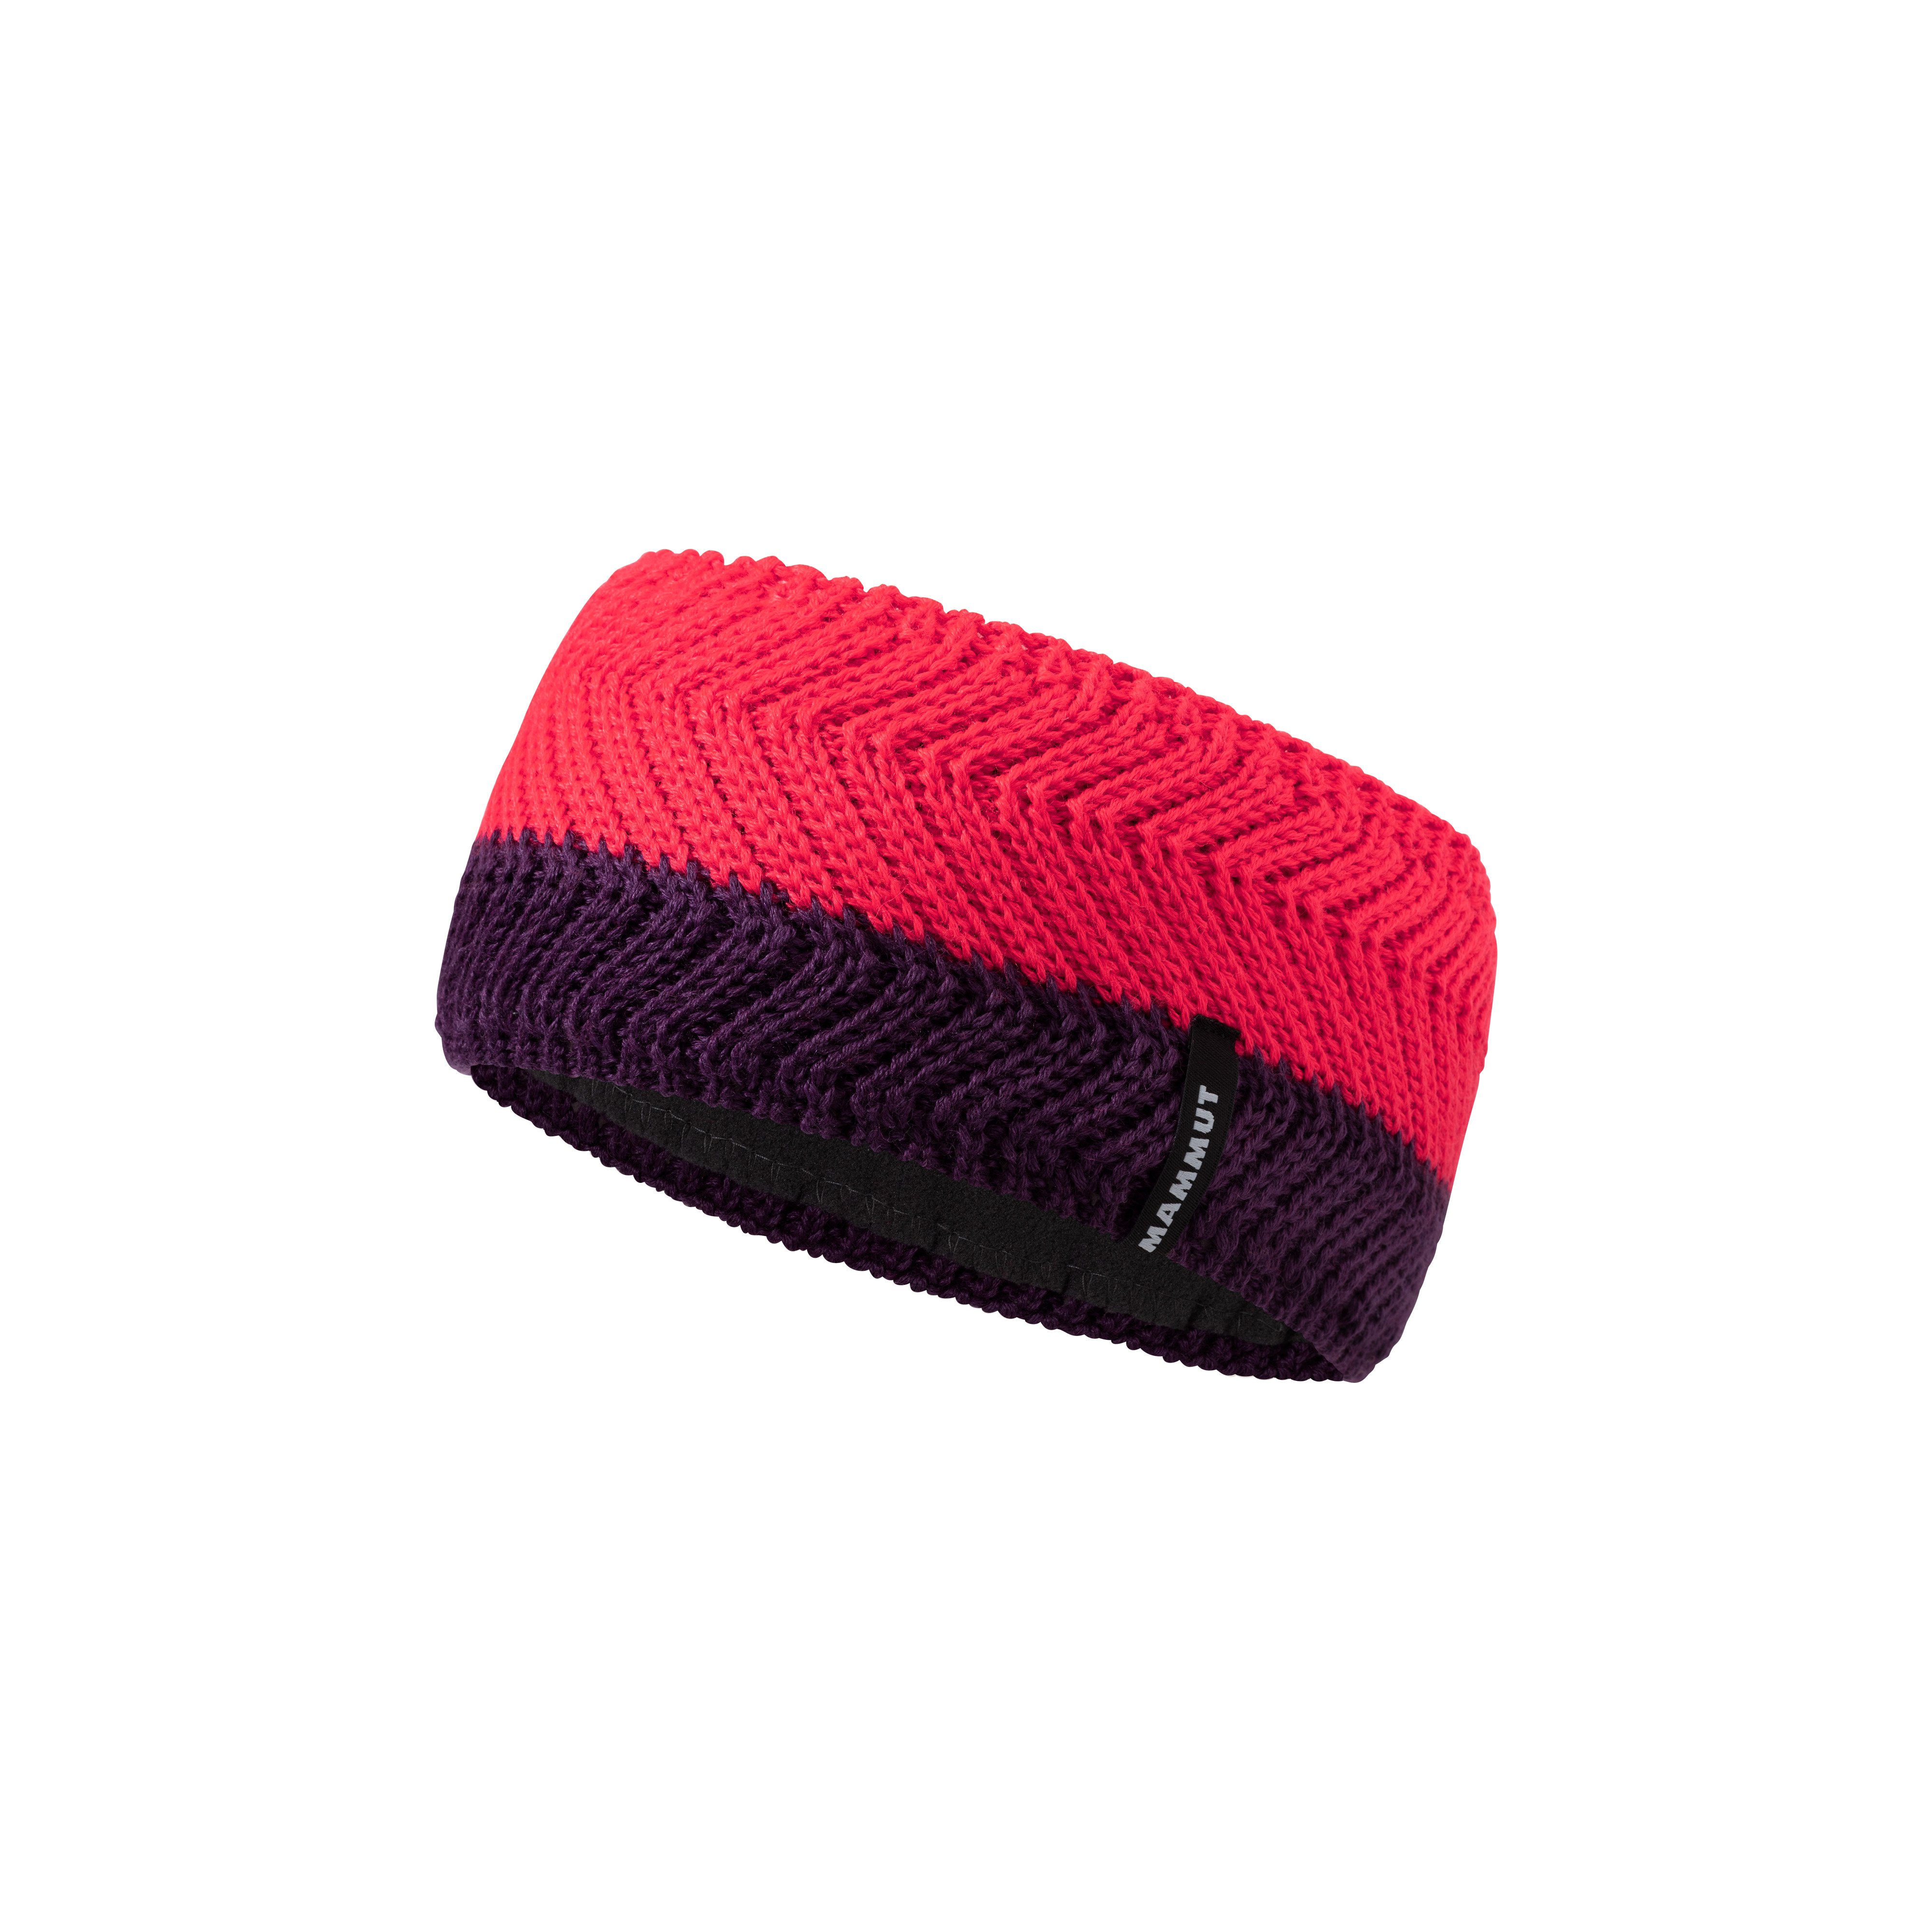 La Liste Headband - grape-sunset, one size product image